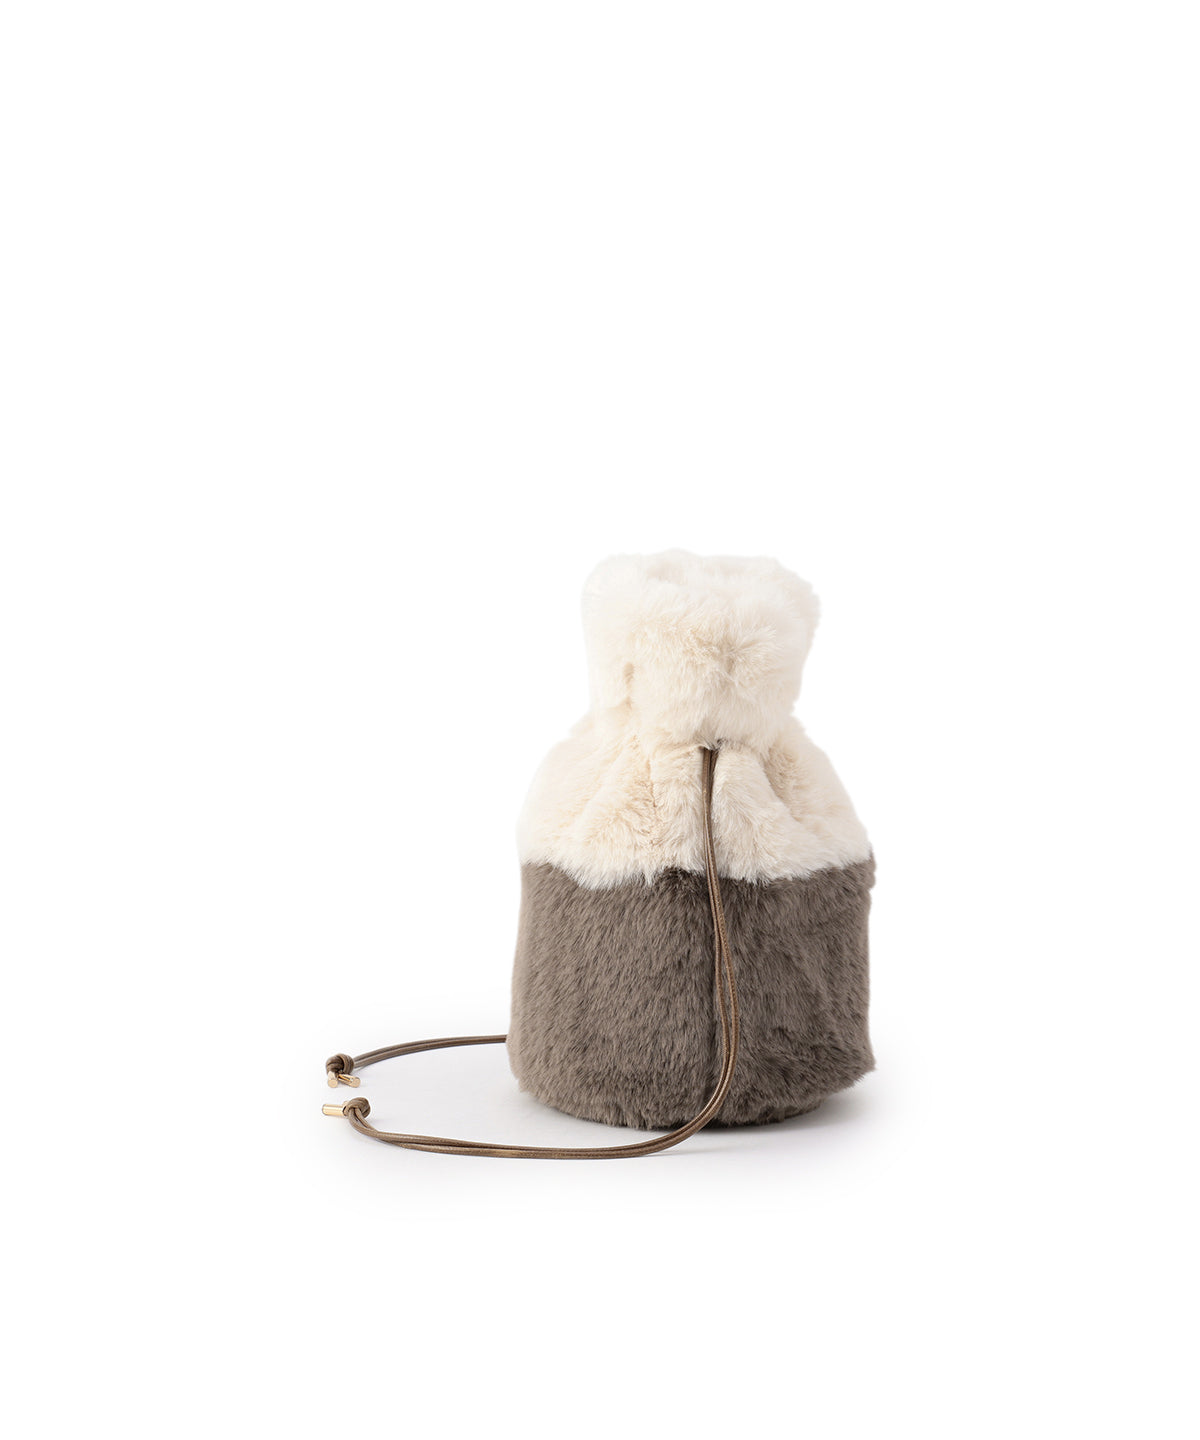 Eco Fur Drawstring Bag (Small) OFF-WHITE×GREIGE